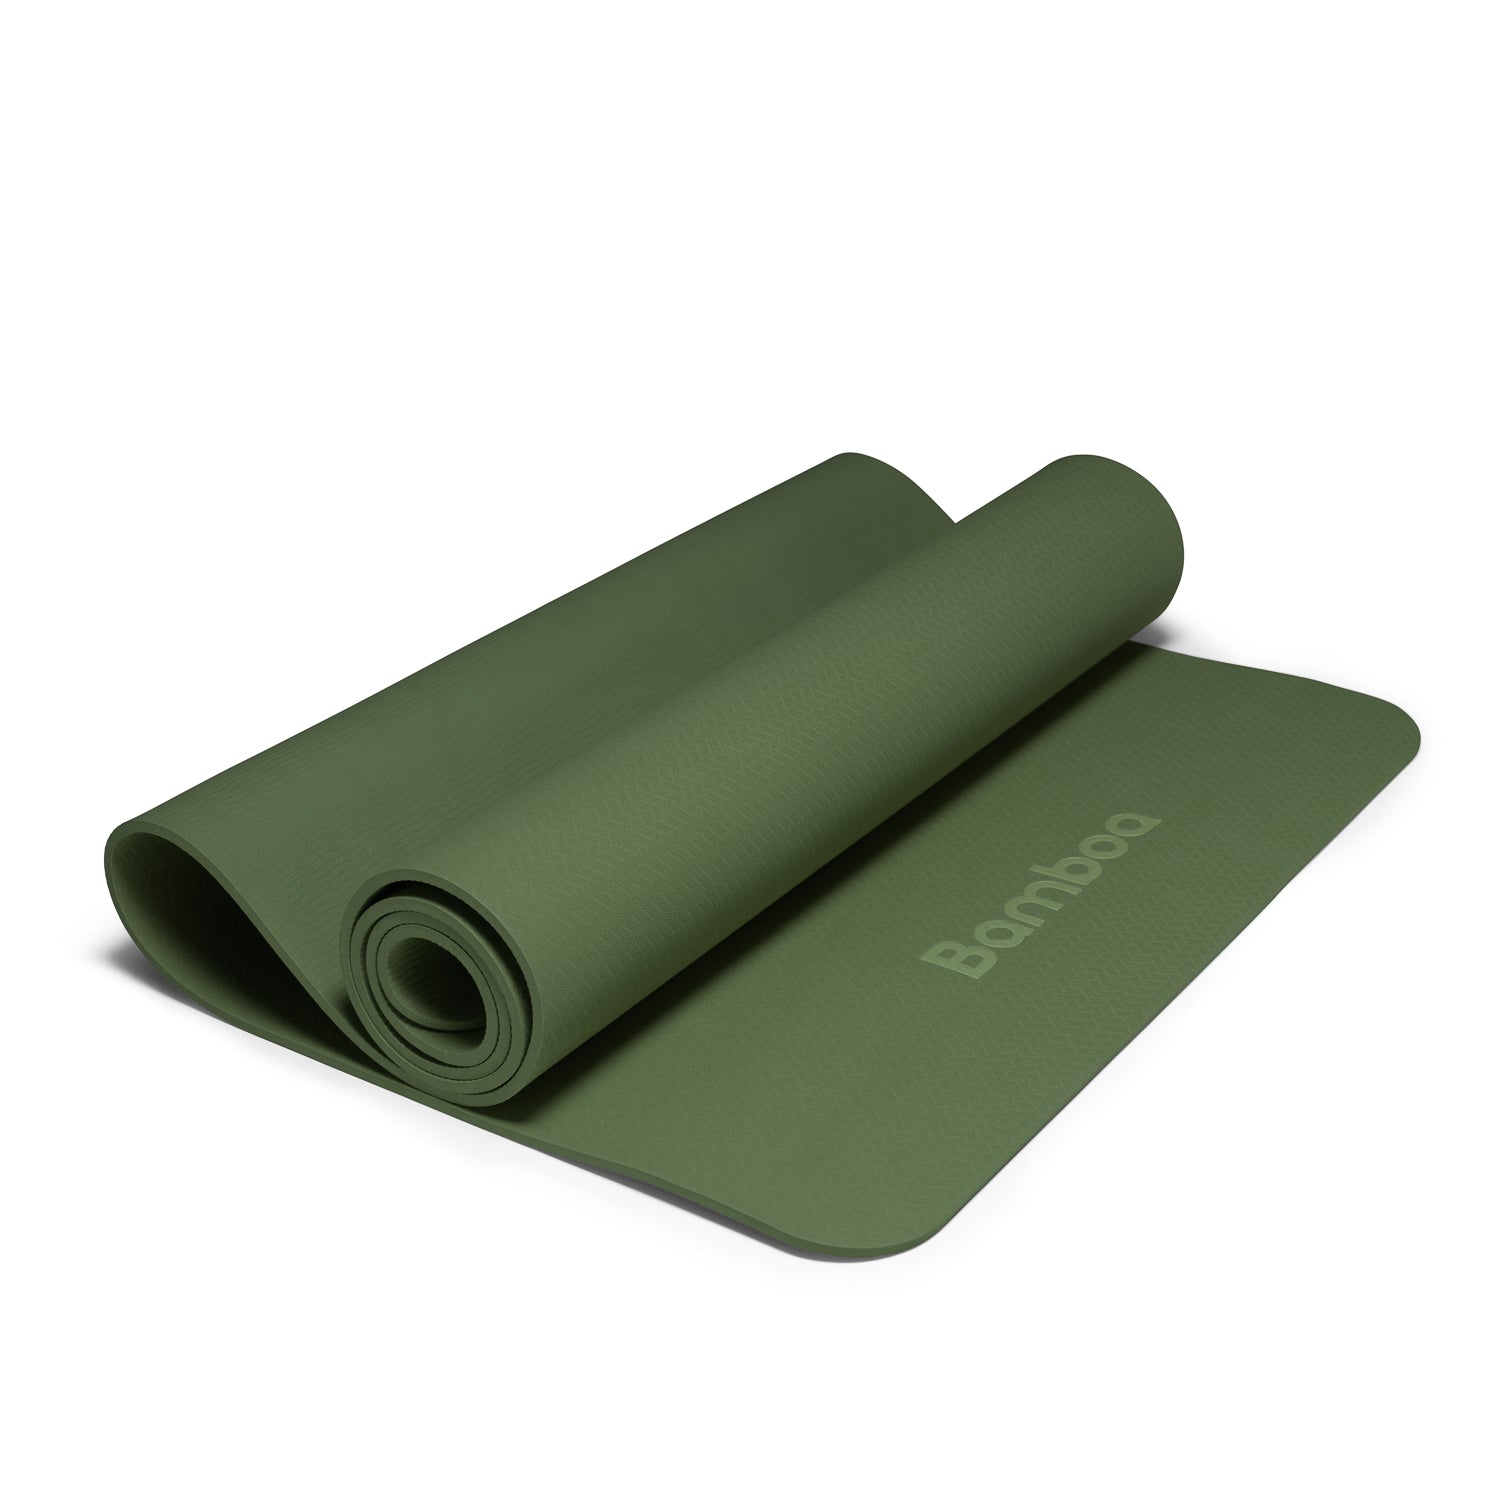 Tappetino yoga Bamboa in schiuma verde 6 mm